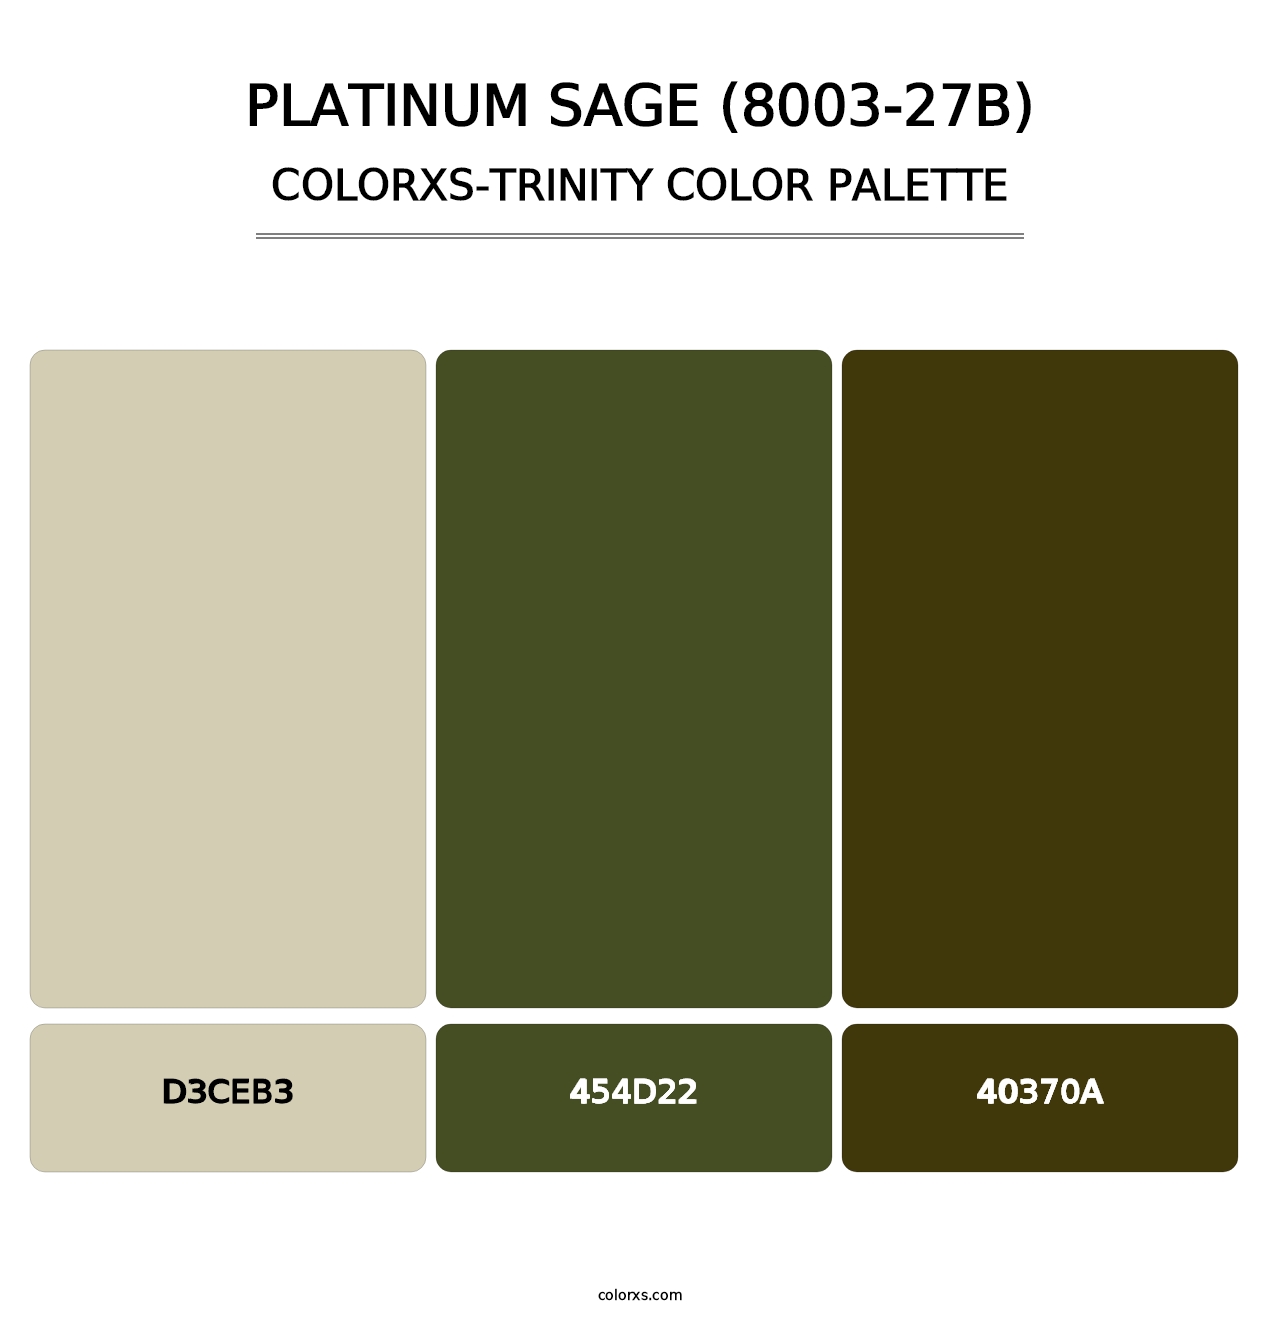 Platinum Sage (8003-27B) - Colorxs Trinity Palette